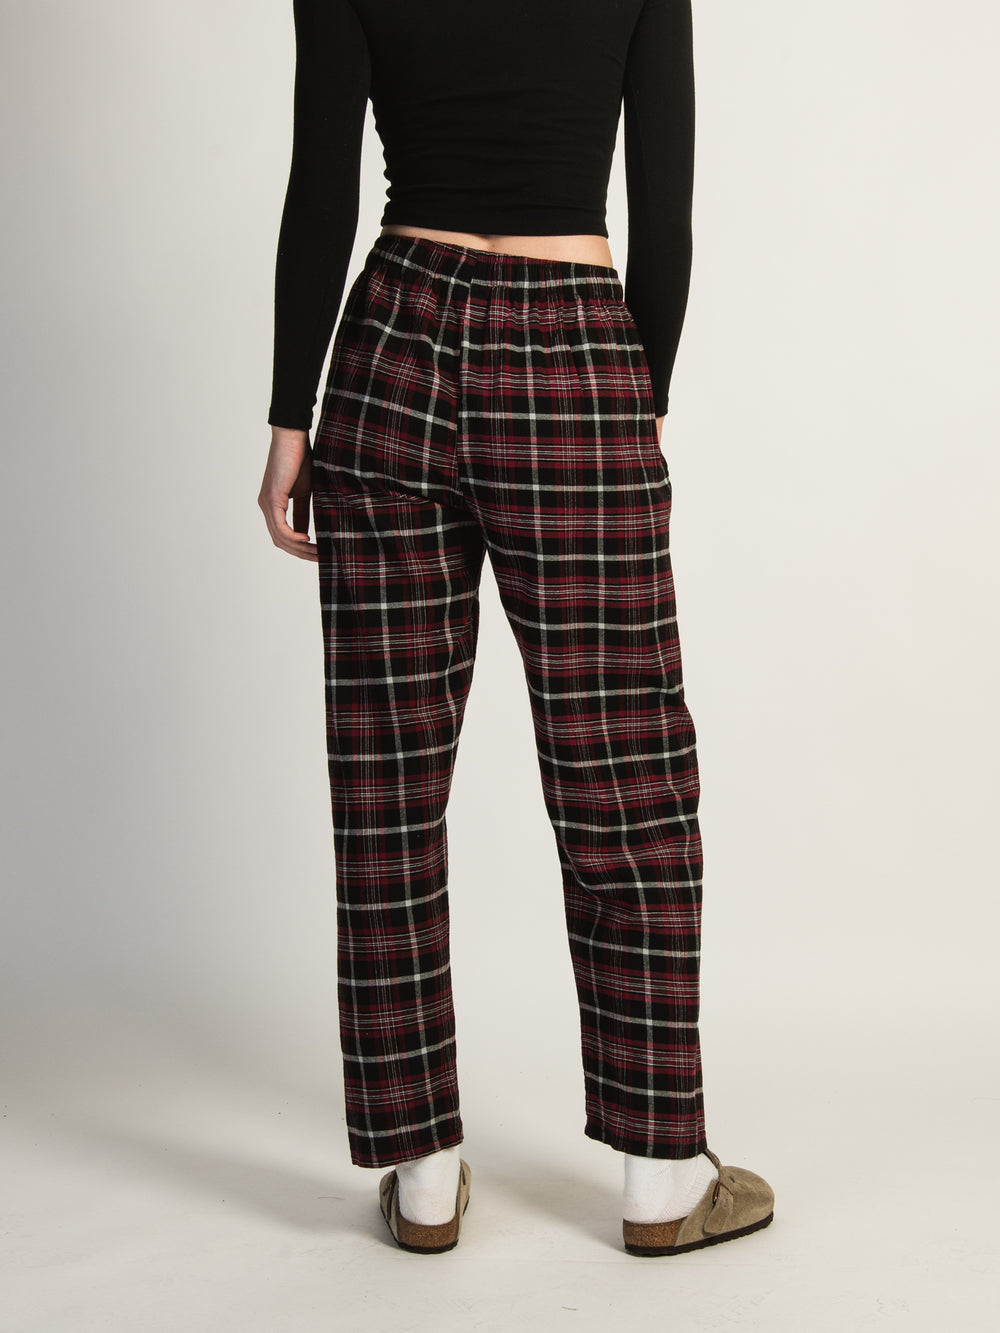 Flannel Sleep Shorts Womens Size S M L XL Plaid Pajama Boxer Lounge 7 Colors